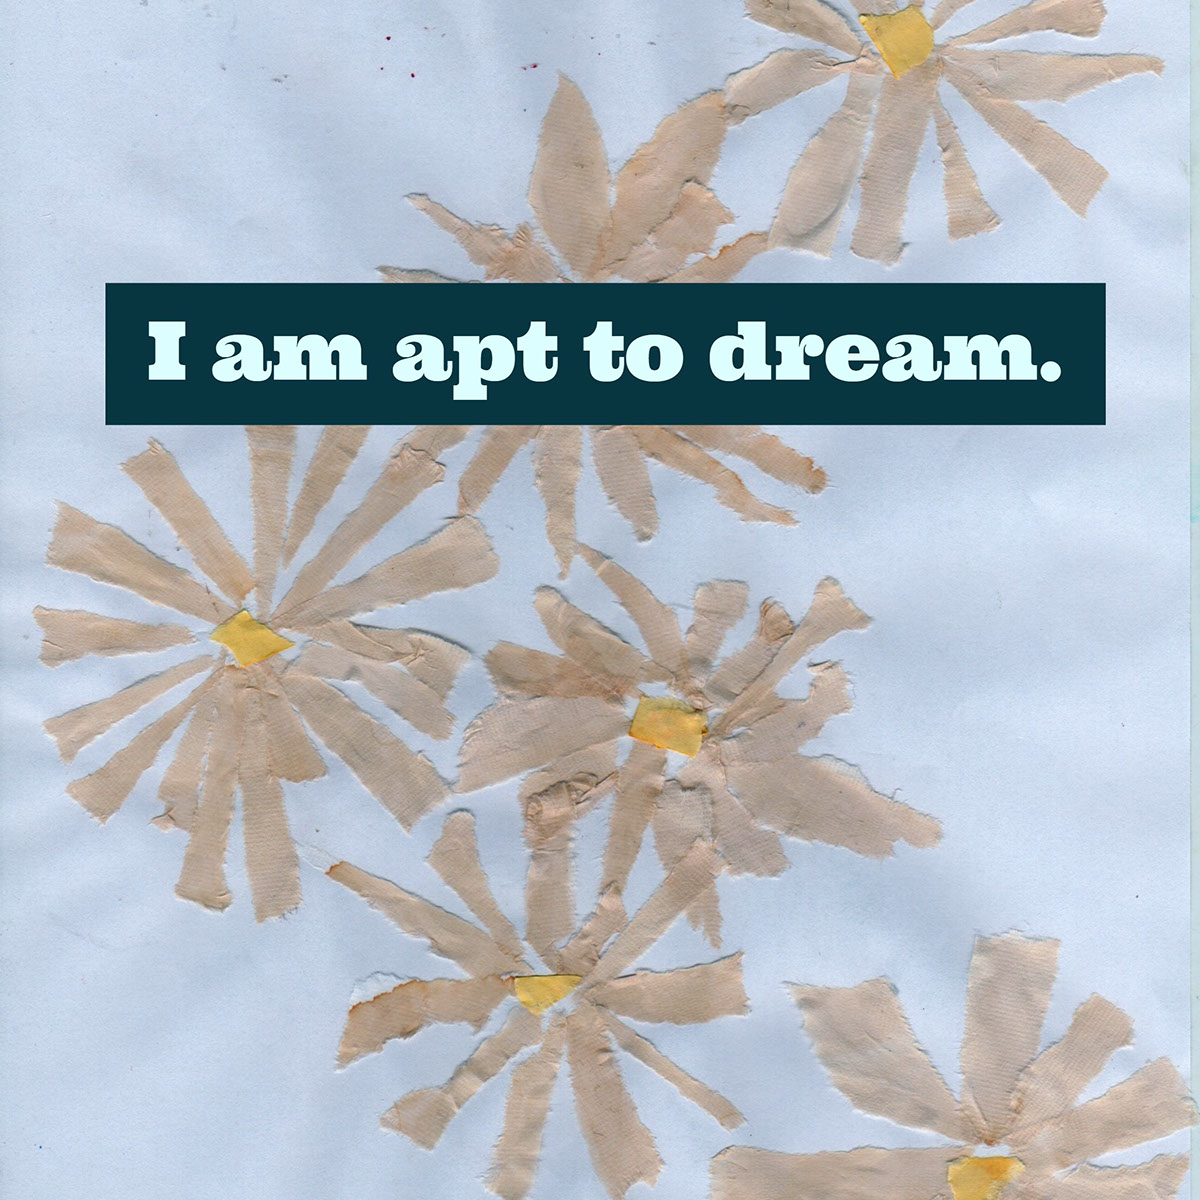 I am apt to dream.